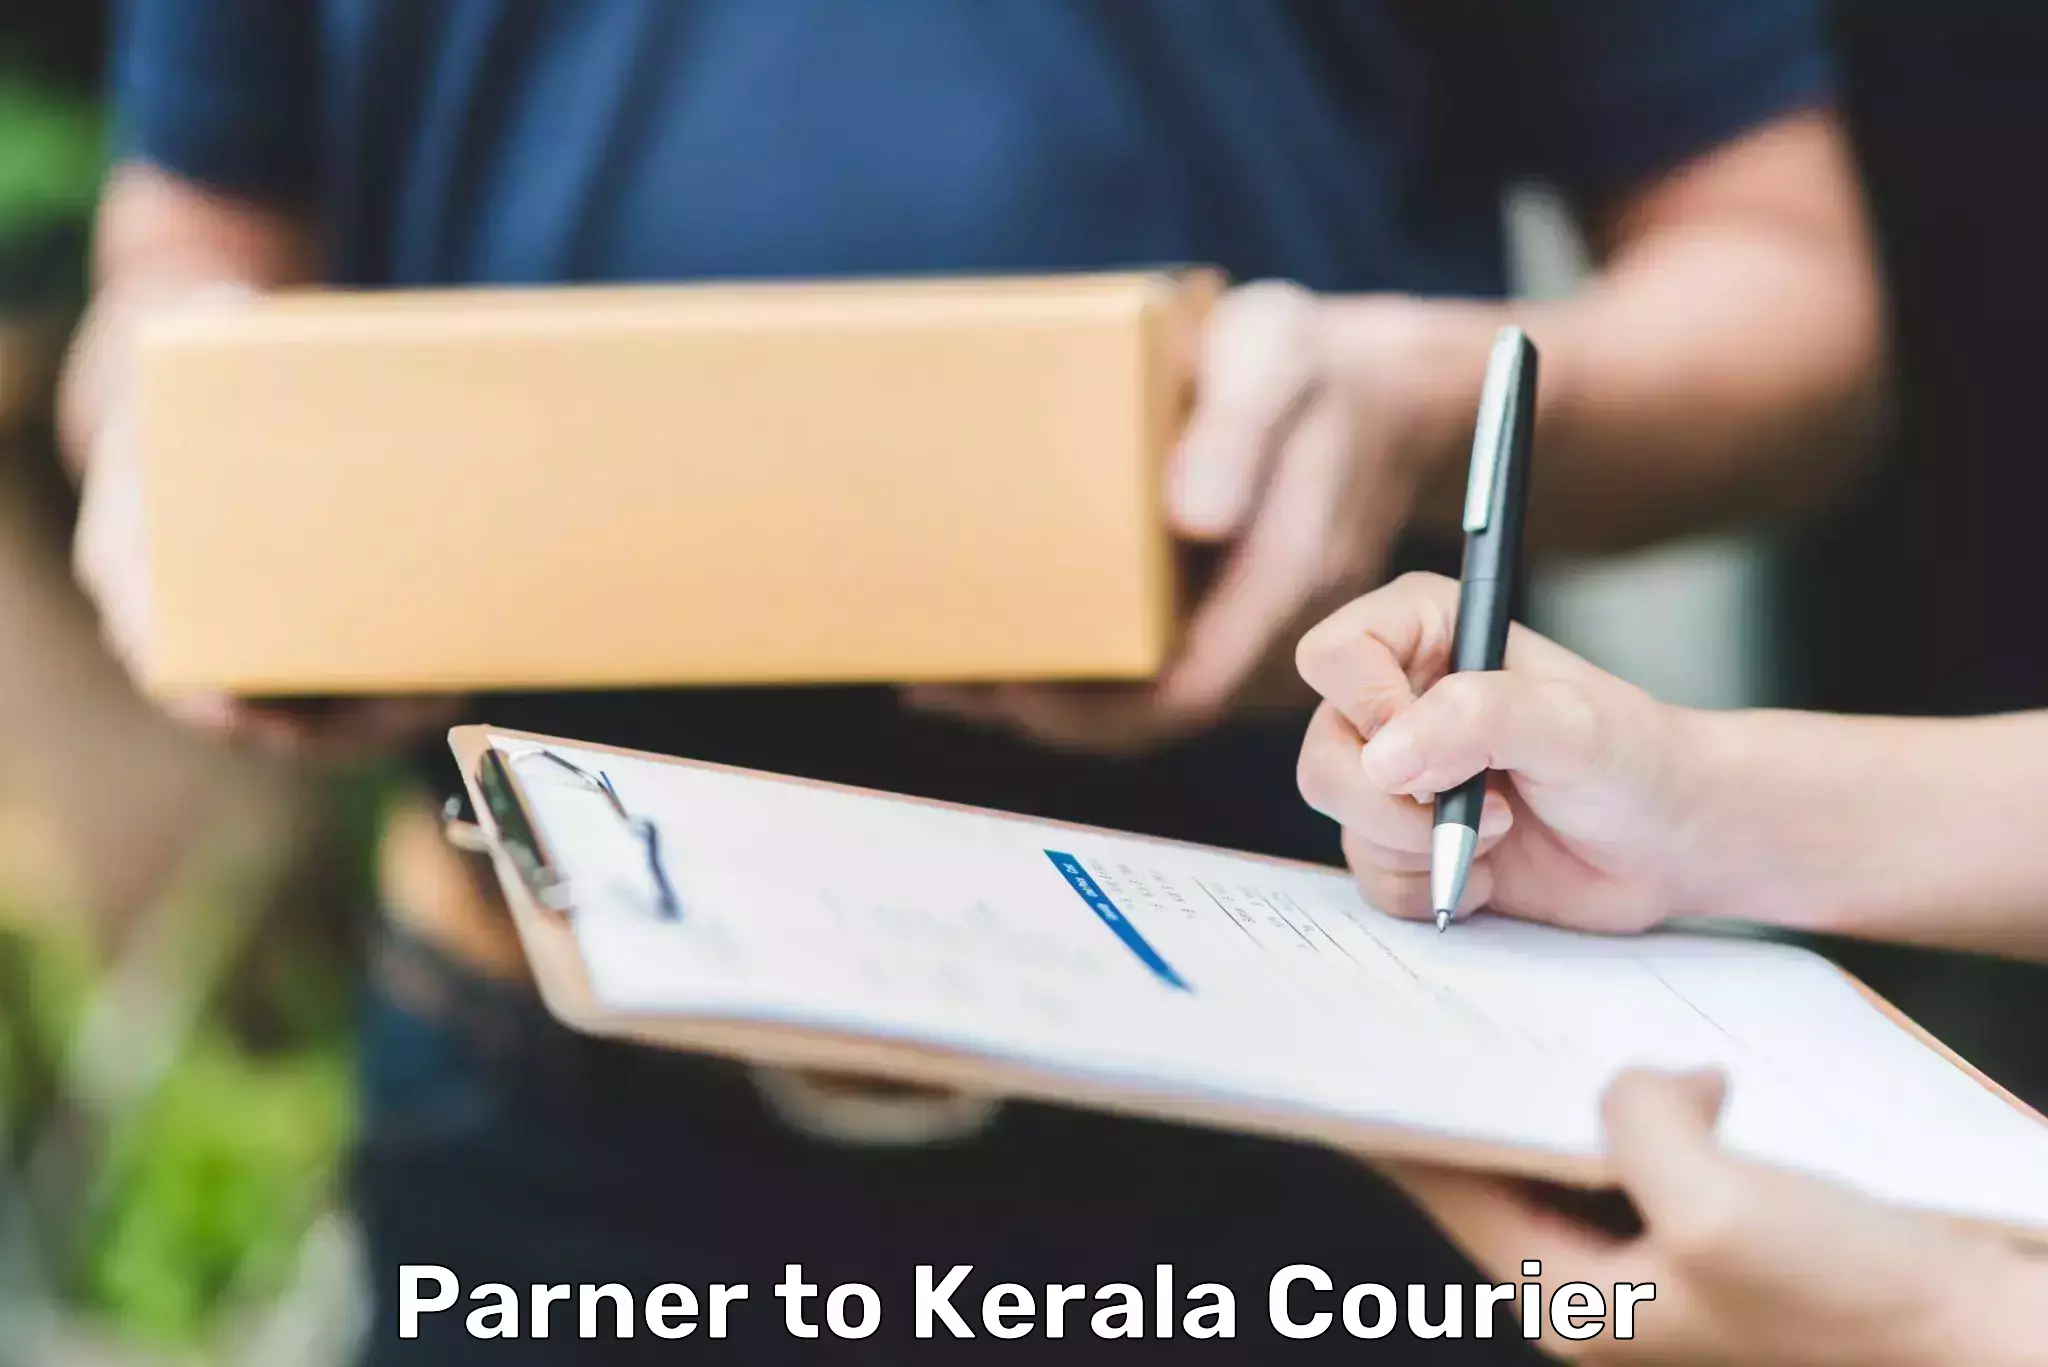 Customizable delivery plans Parner to Kattappana